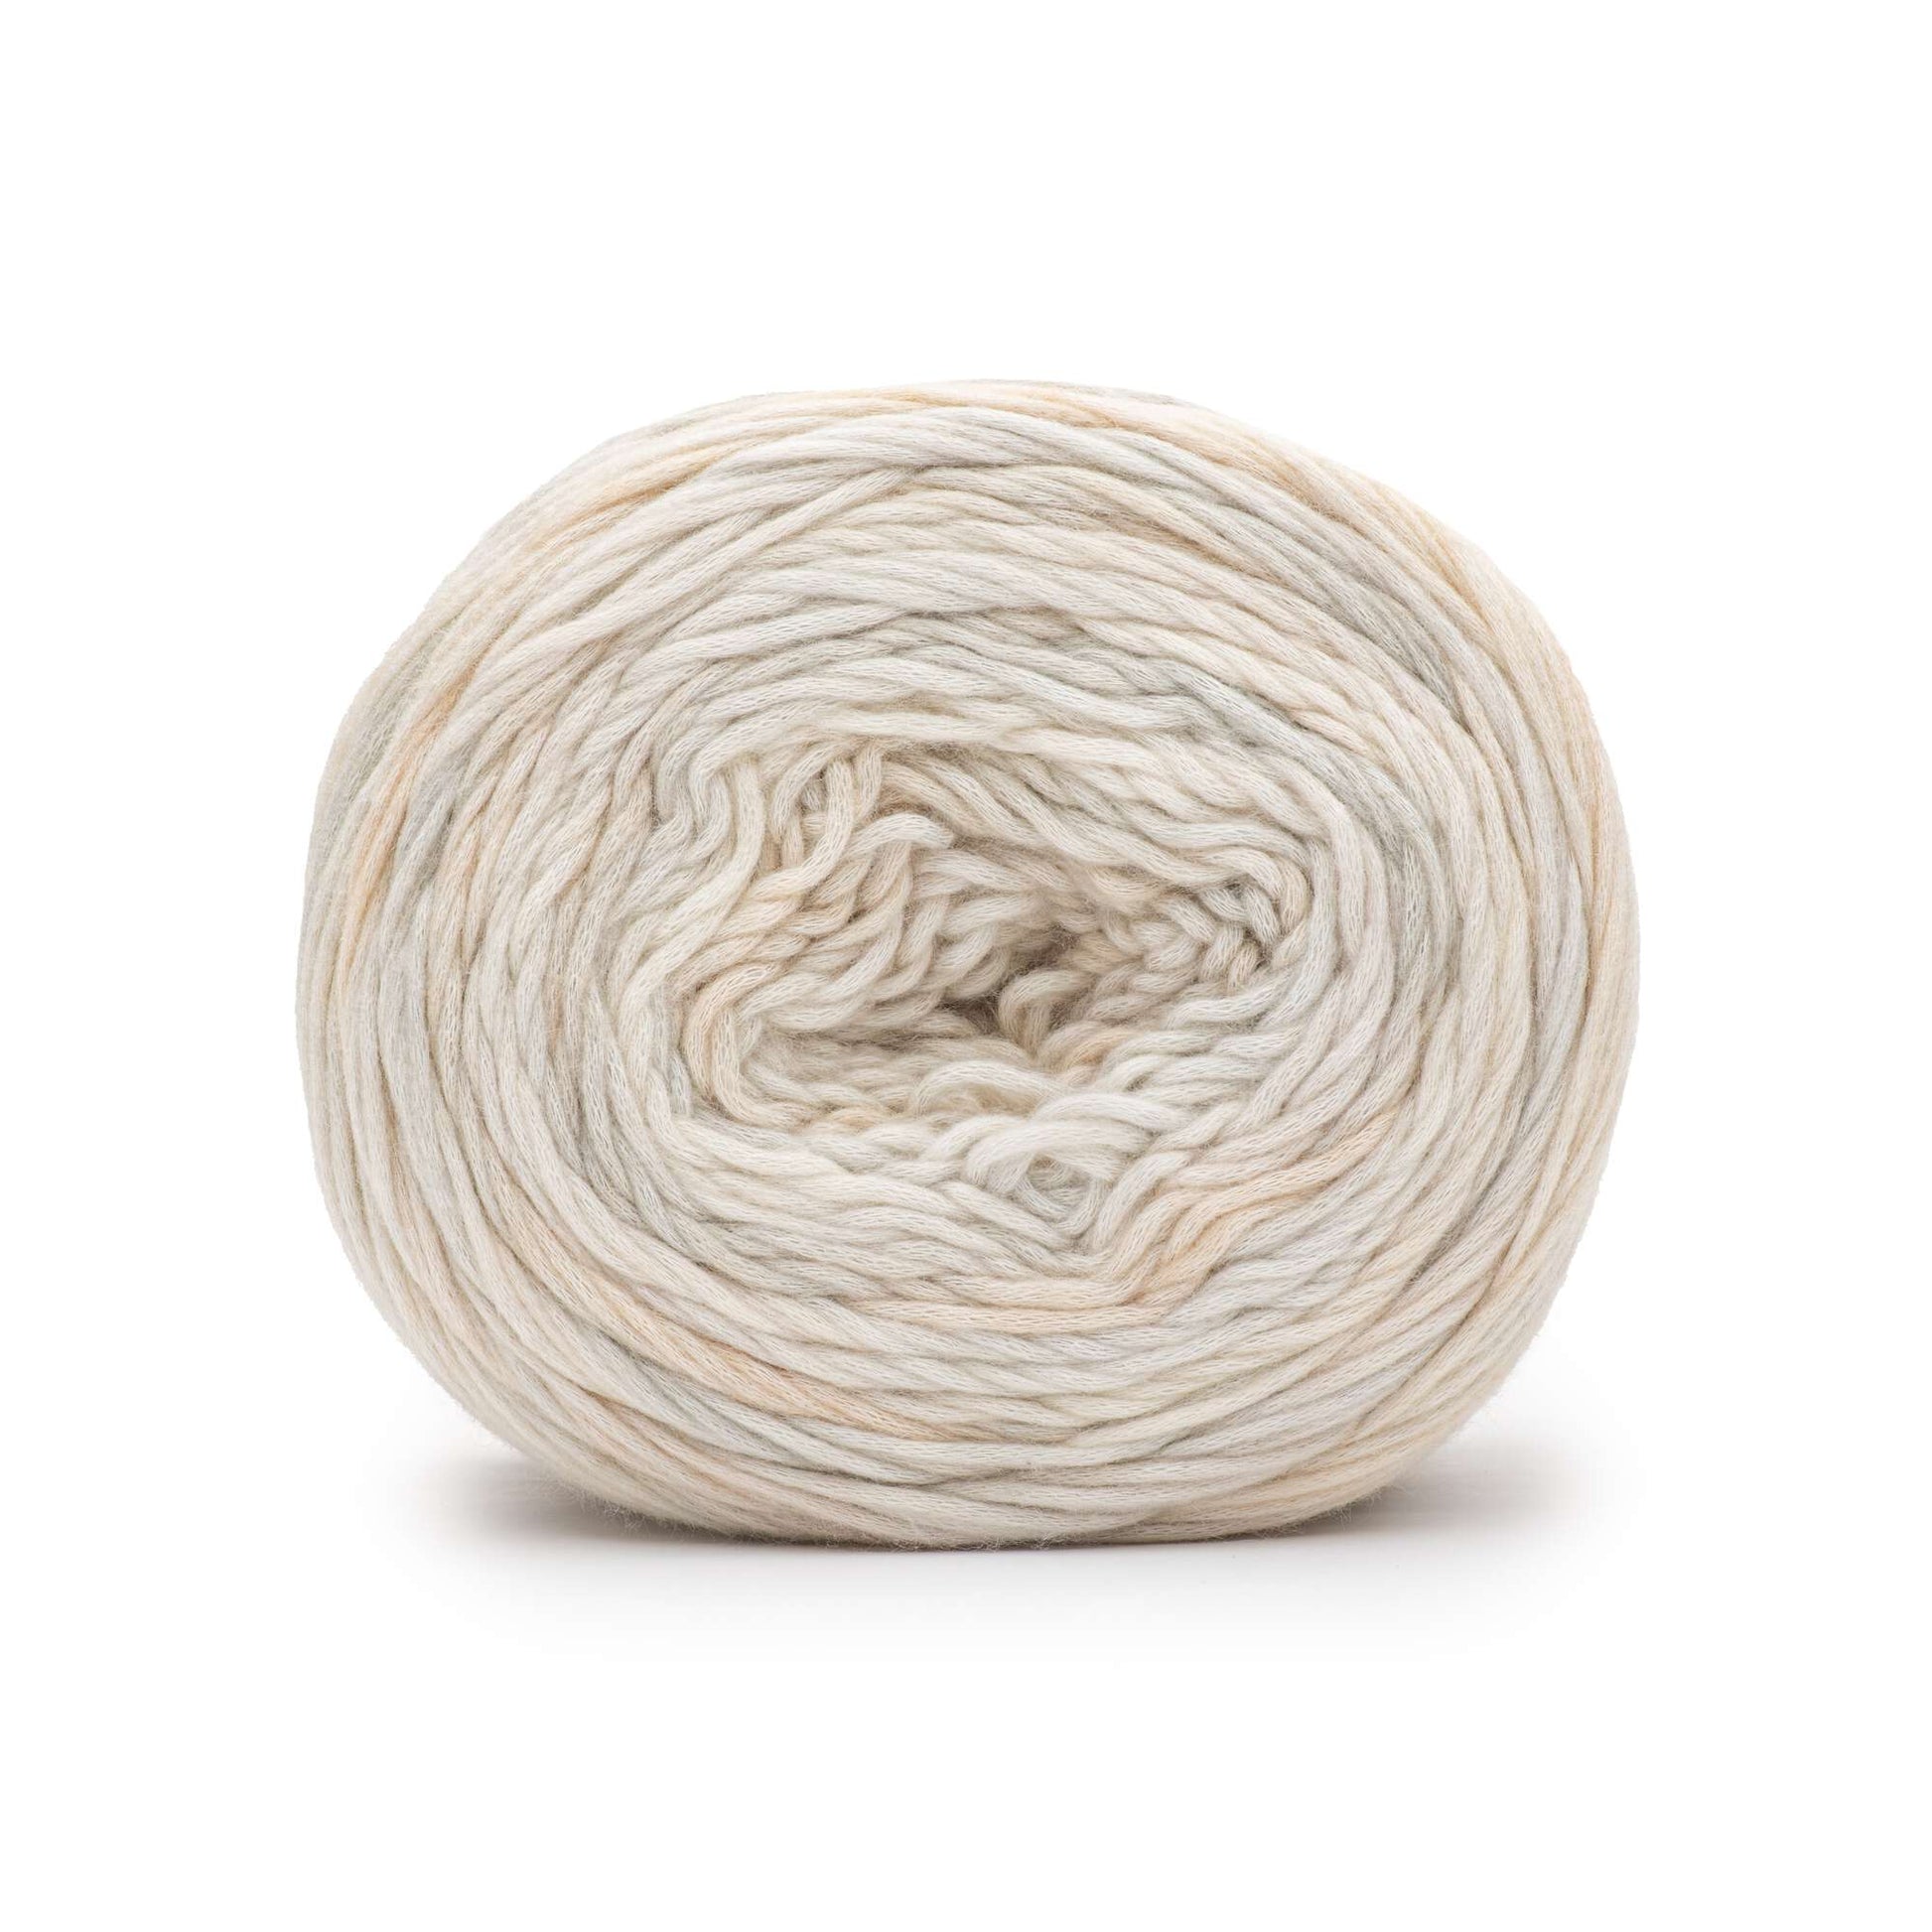 Caron Blossom Cakes Crochet Yarn in Yacht Club | Size: 454g/16oz | Pattern: Crochet | by Yarnspirations